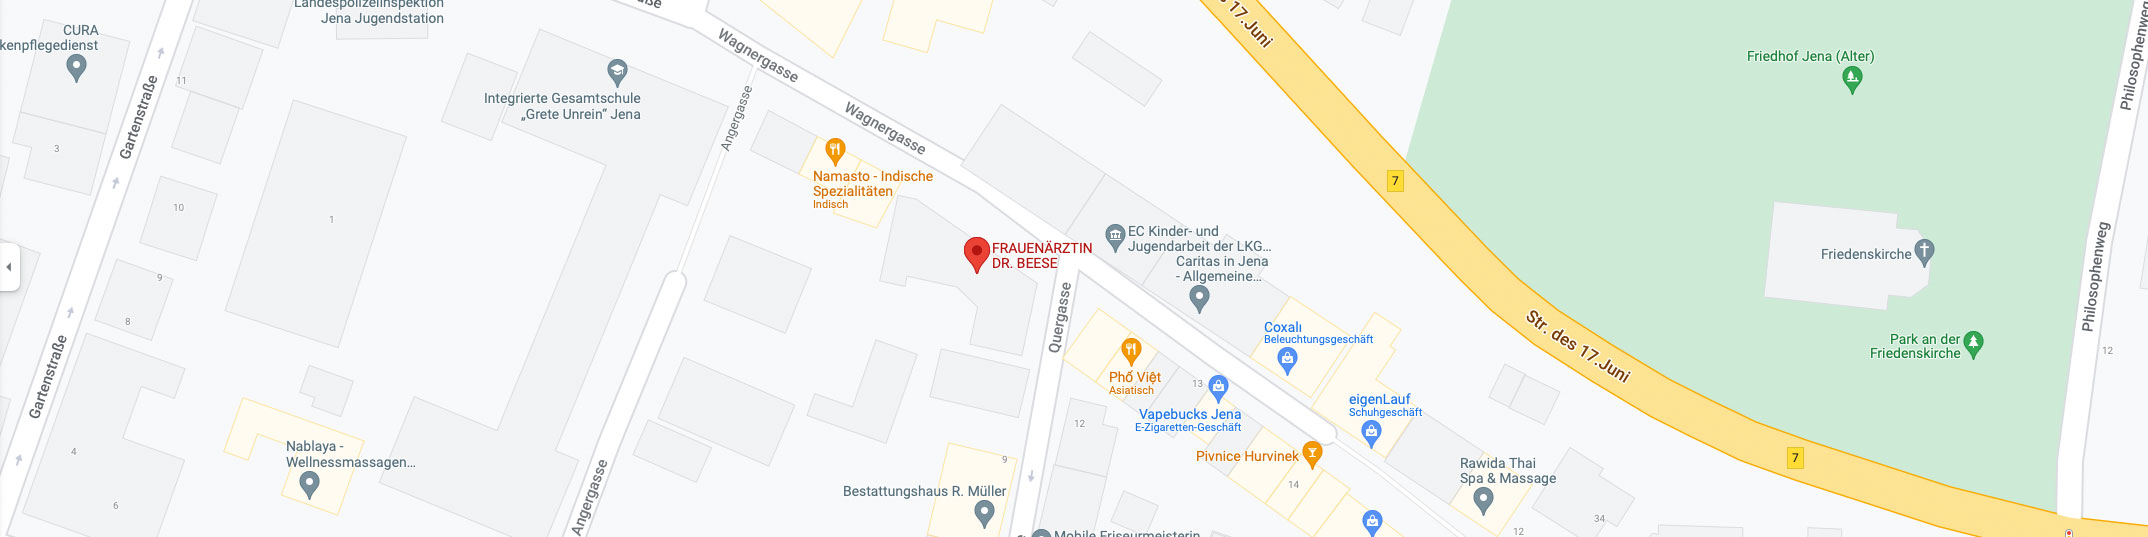 Google-Map-Bild: Frauenärztin Dr. Beese, Jena (Kartendaten © 2022 GeoBasis-DE/BKG (© 2009), Google)